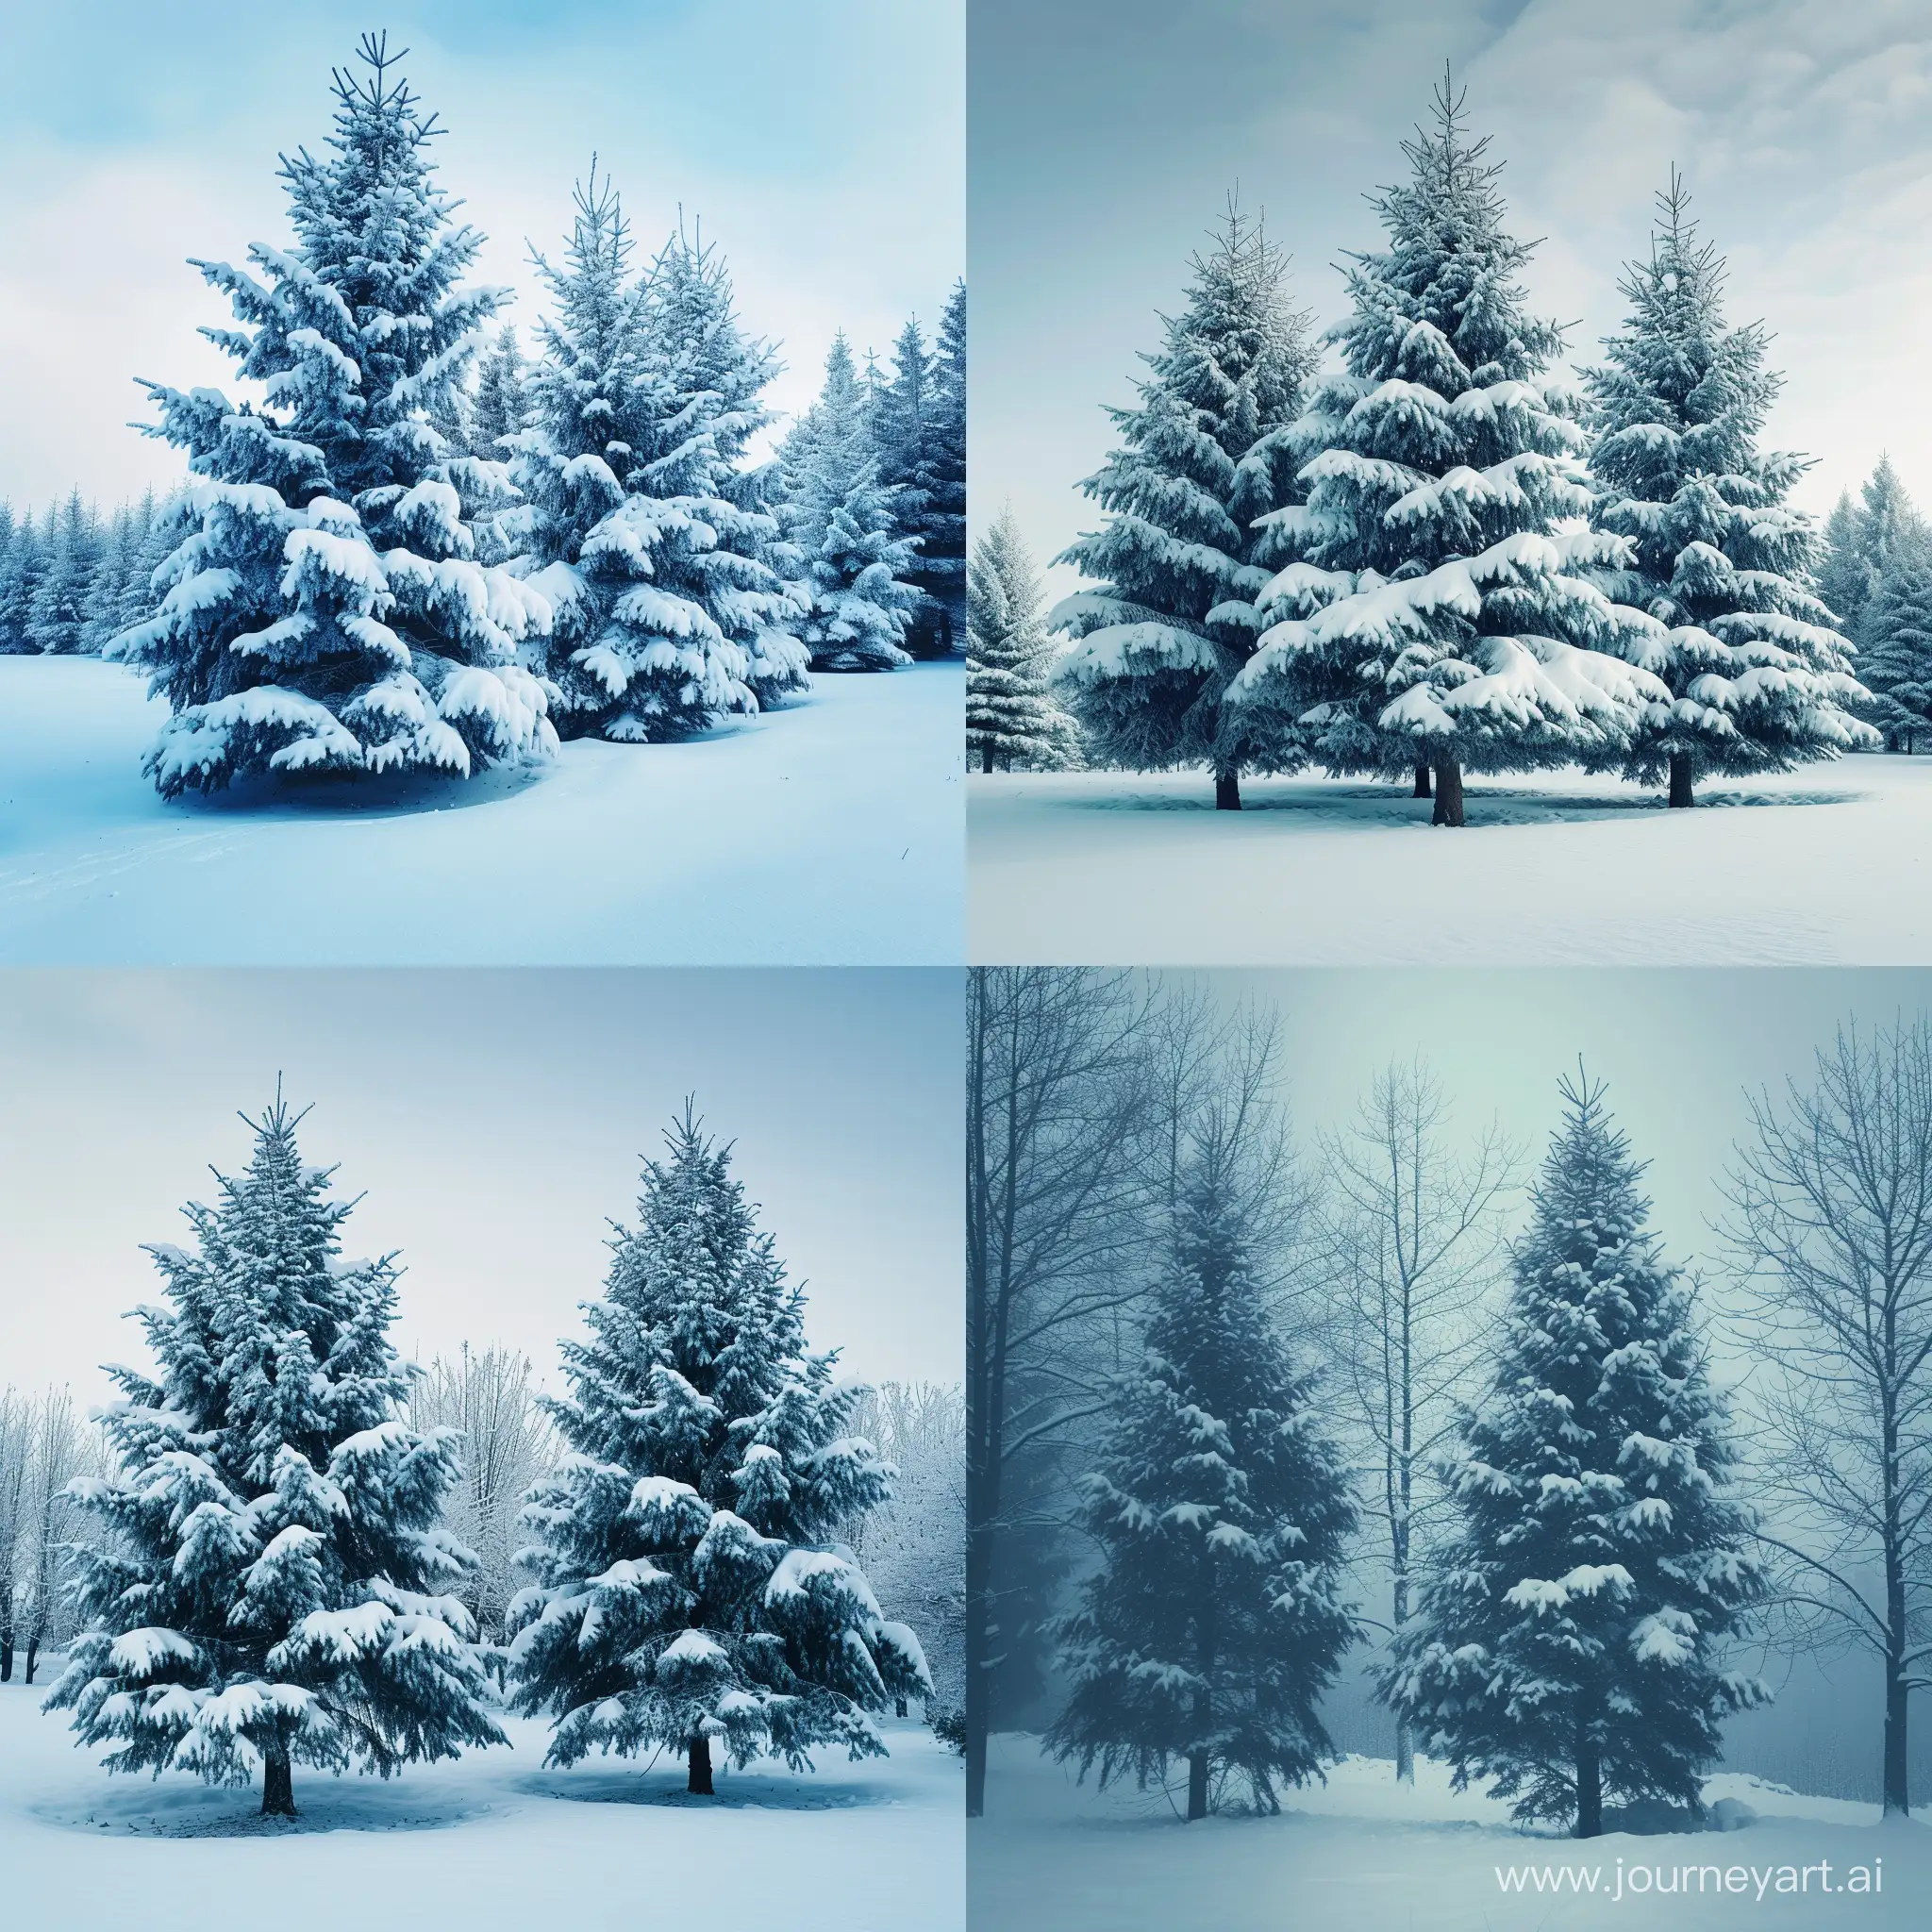 Winter-Wonderland-Festive-Christmas-Trees-in-Snowy-Blue-Tones